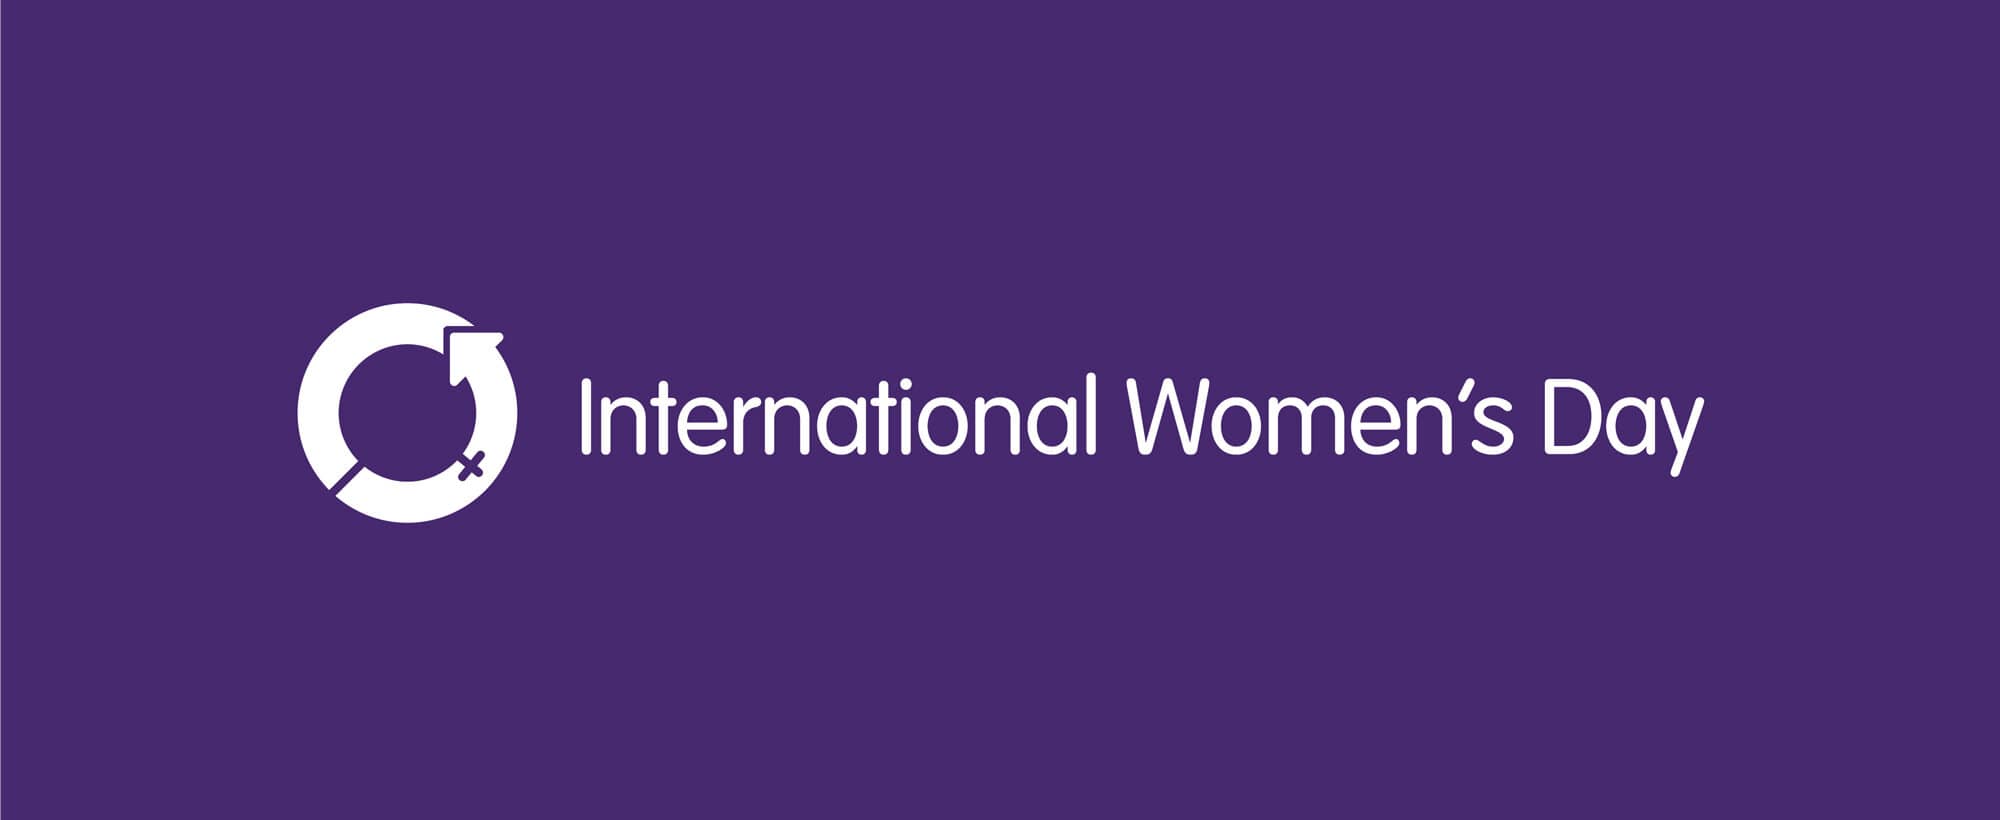 International Women’s Day: RCS Europe | Royal Commonwealth Society